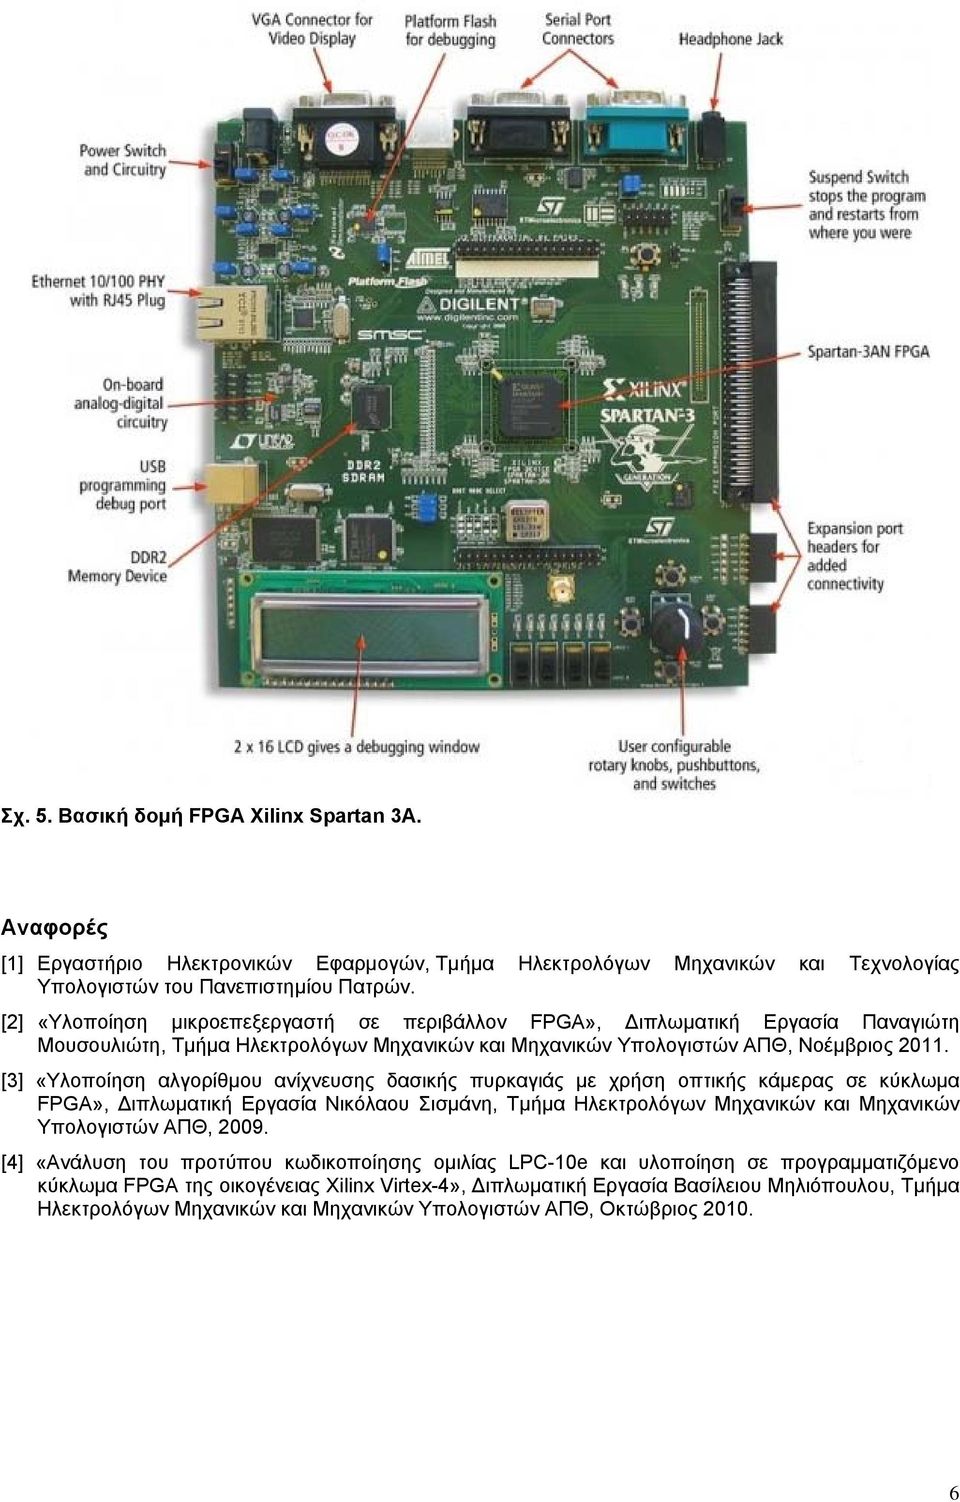 [3] «Yλοποίηση αλγορίθμου ανίχνευσης δασικής πυρκαγιάς με χρήση οπτικής κάμερας σε κύκλωμα FPGA», ιπλωματική Εργασία Νικόλαου Σισμάνη, Τμήμα Ηλεκτρολόγων Μηχανικών και Μηχανικών Υπολογιστών ΑΠΘ, 2009.